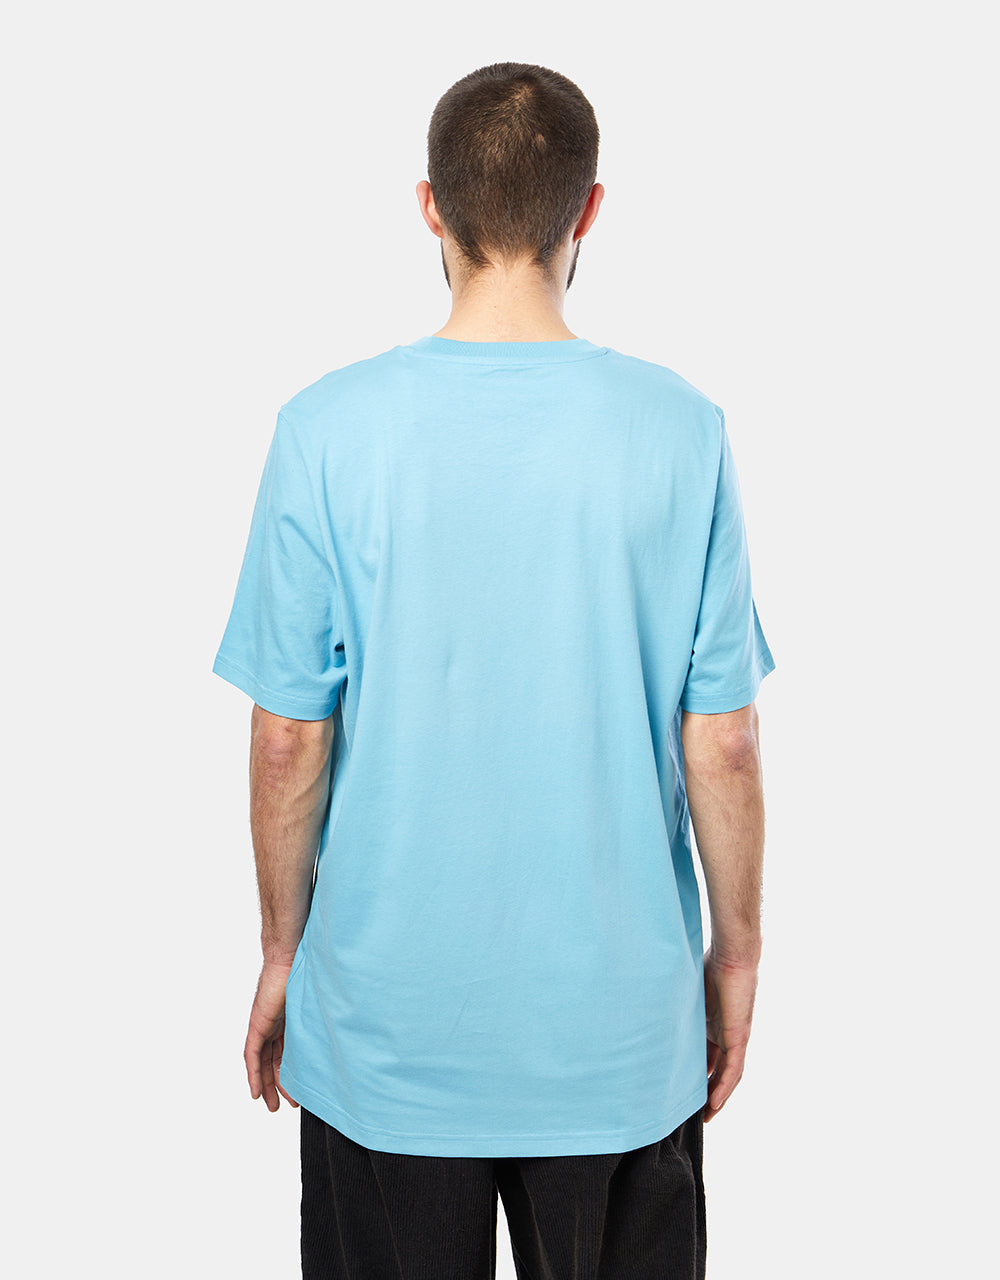 adidas 4.0 Strike T-Shirt - Preloved Blue/White